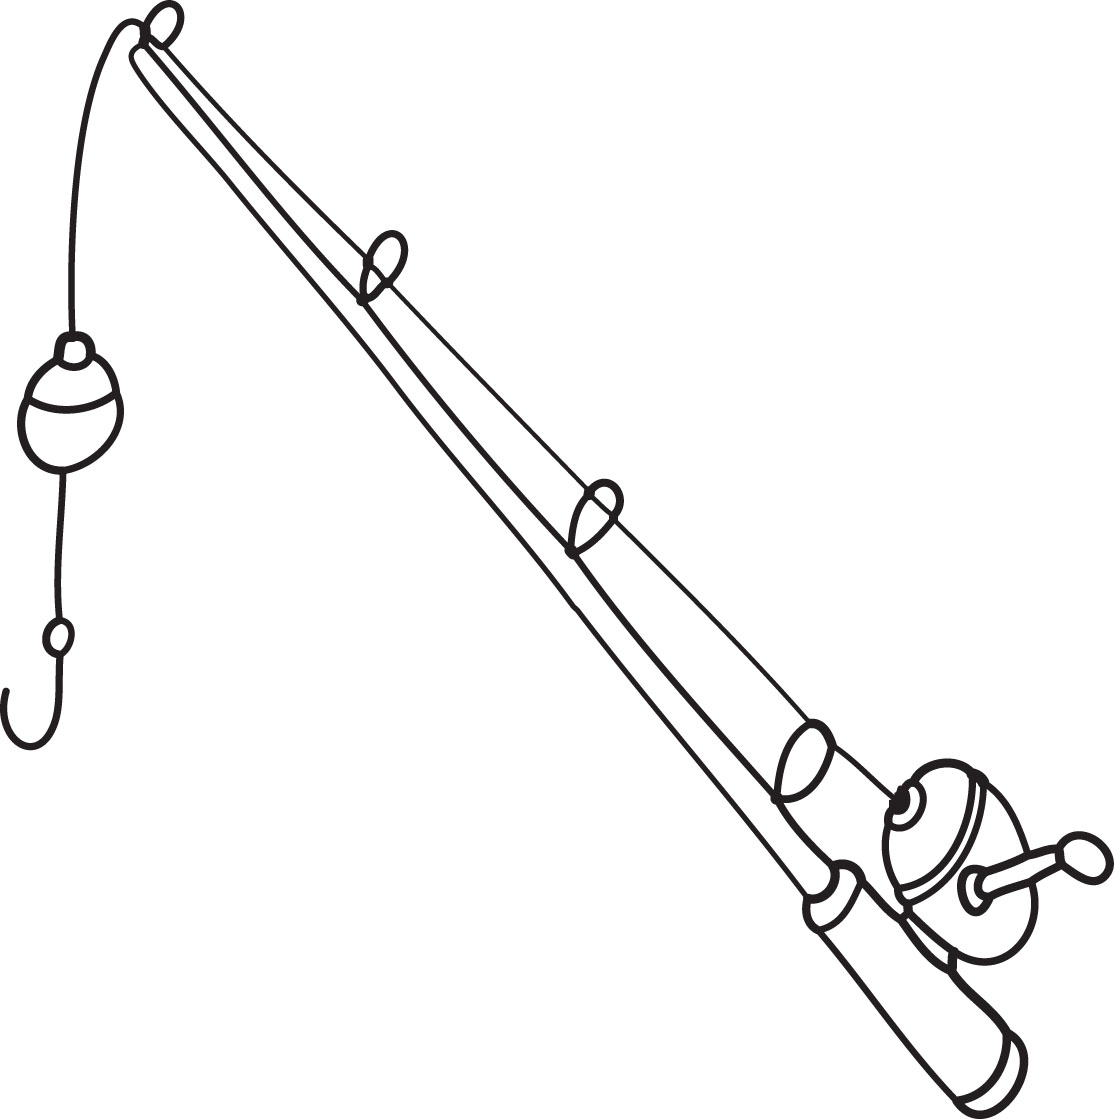 Clipart Fishing Rod